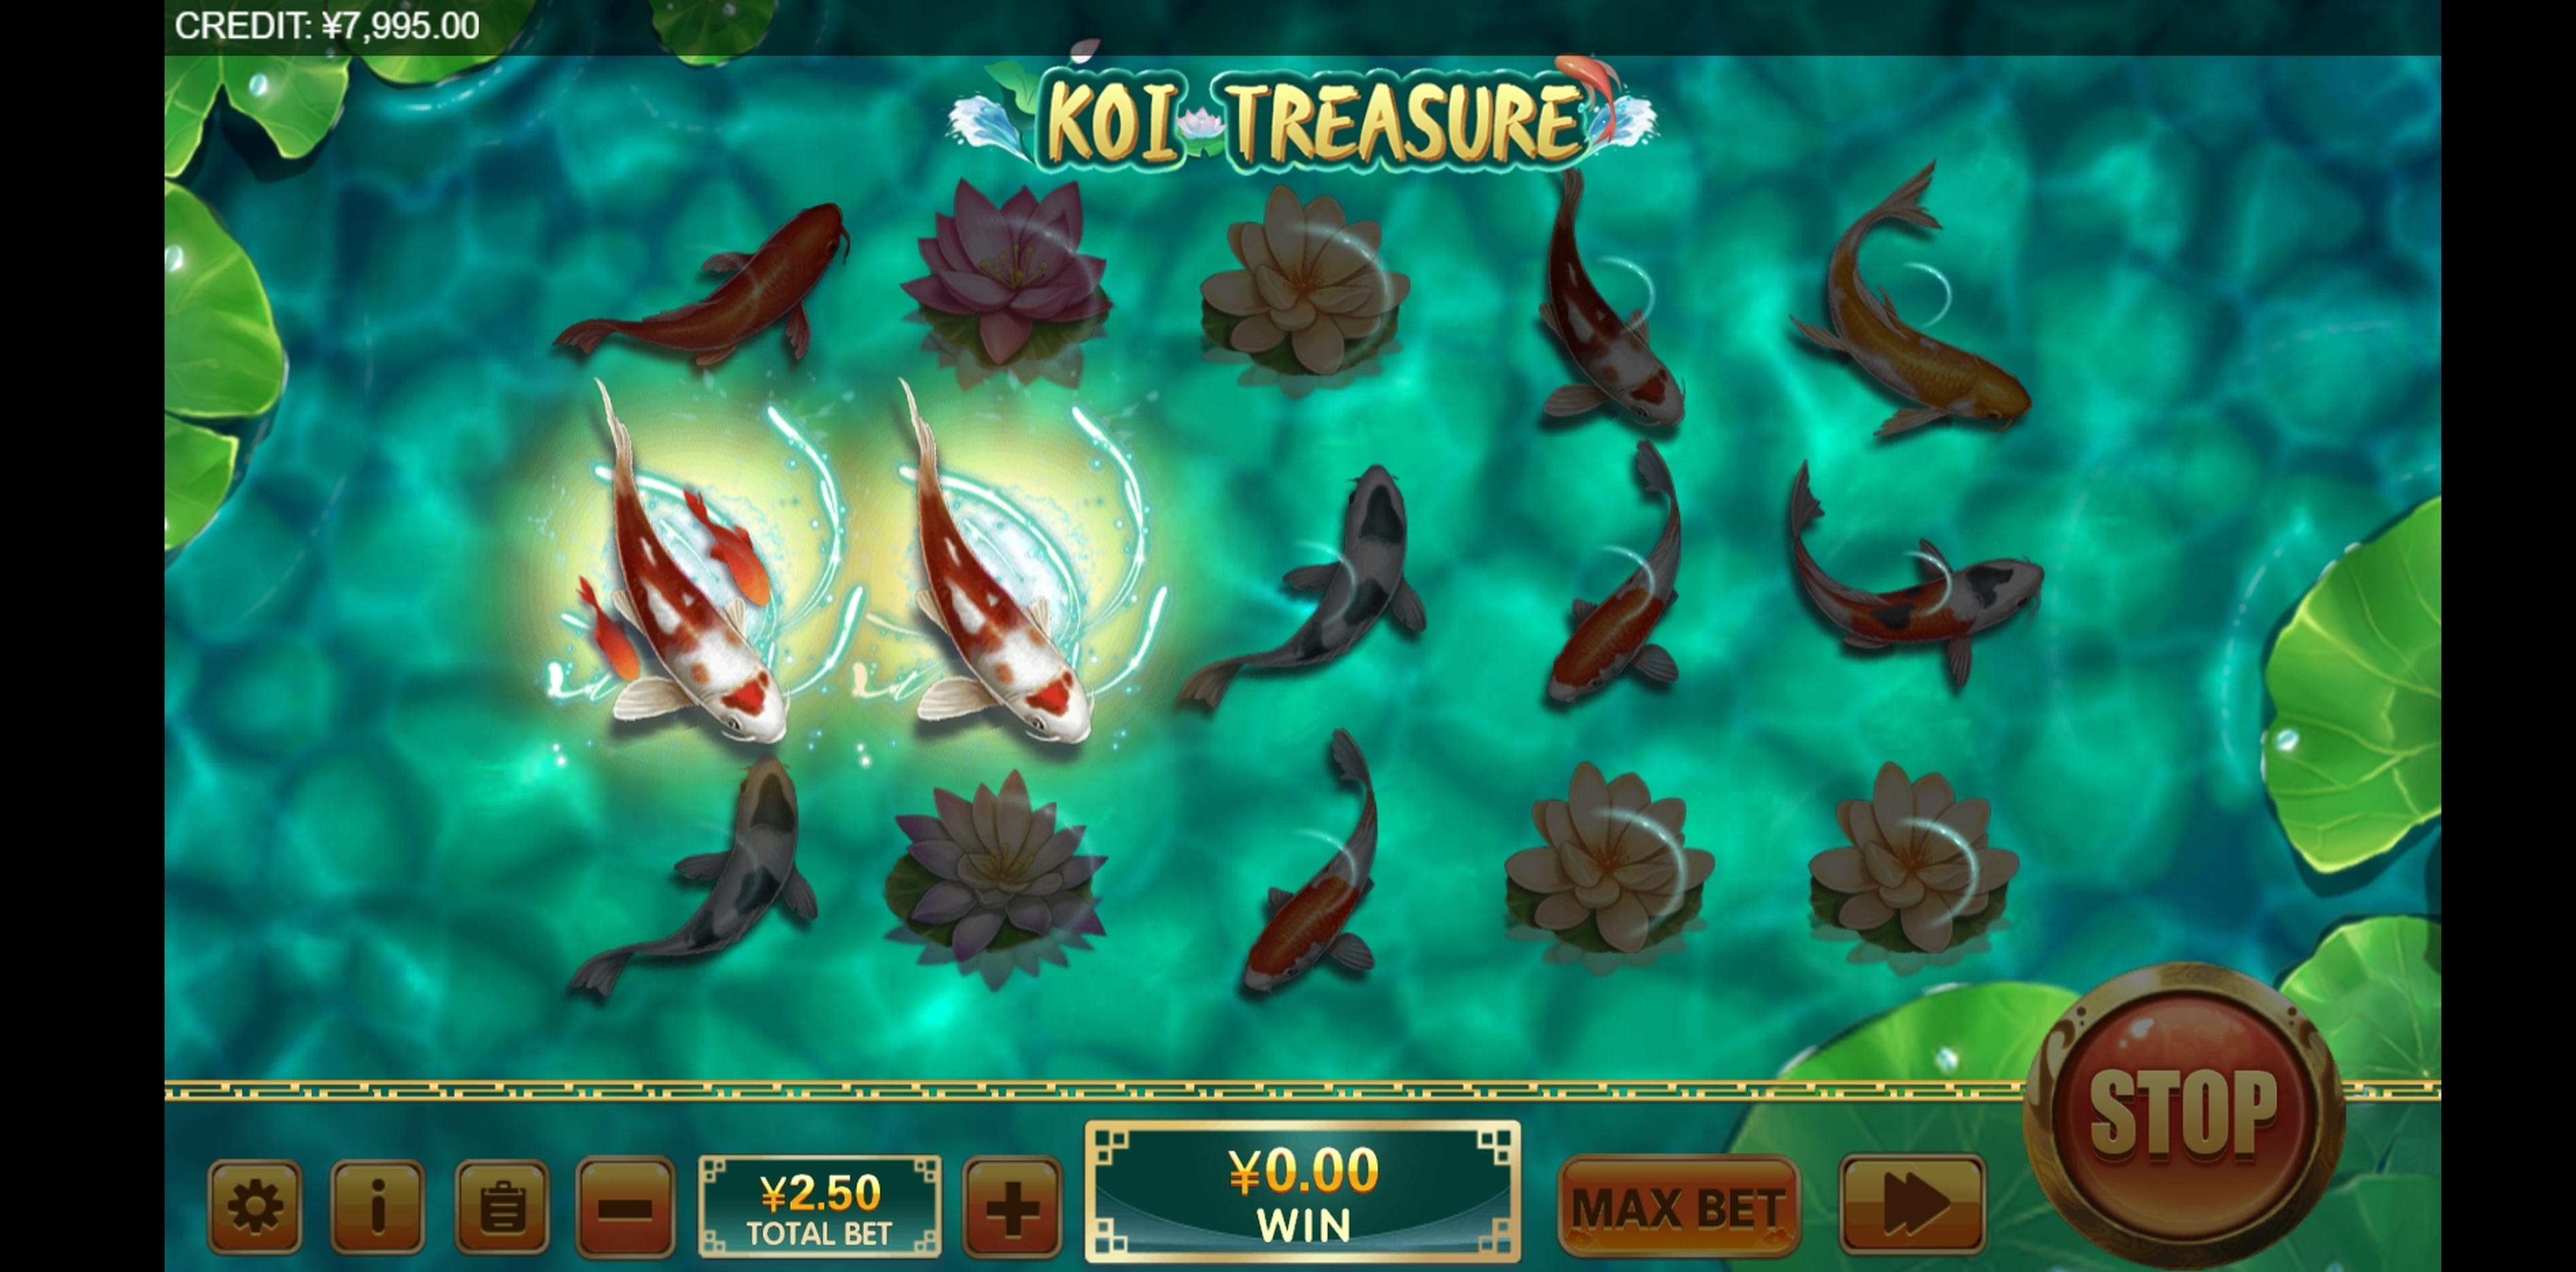 Win Money in Koi Treasure Free Slot Game by XIN Gaming